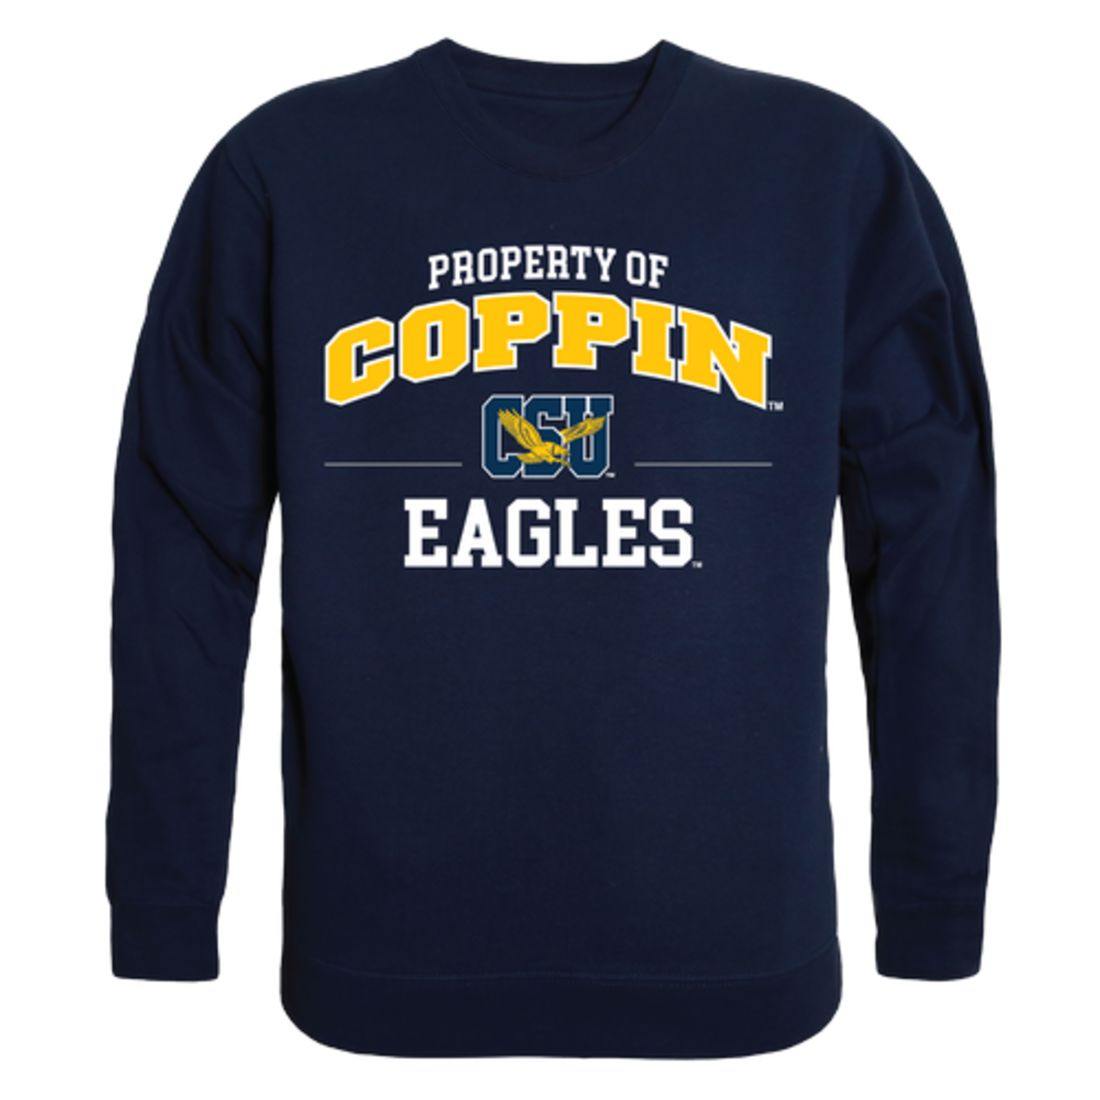 CSU Coppin State University Eagles Property Crewneck Pullover Sweatshirt Sweater Navy-Campus-Wardrobe